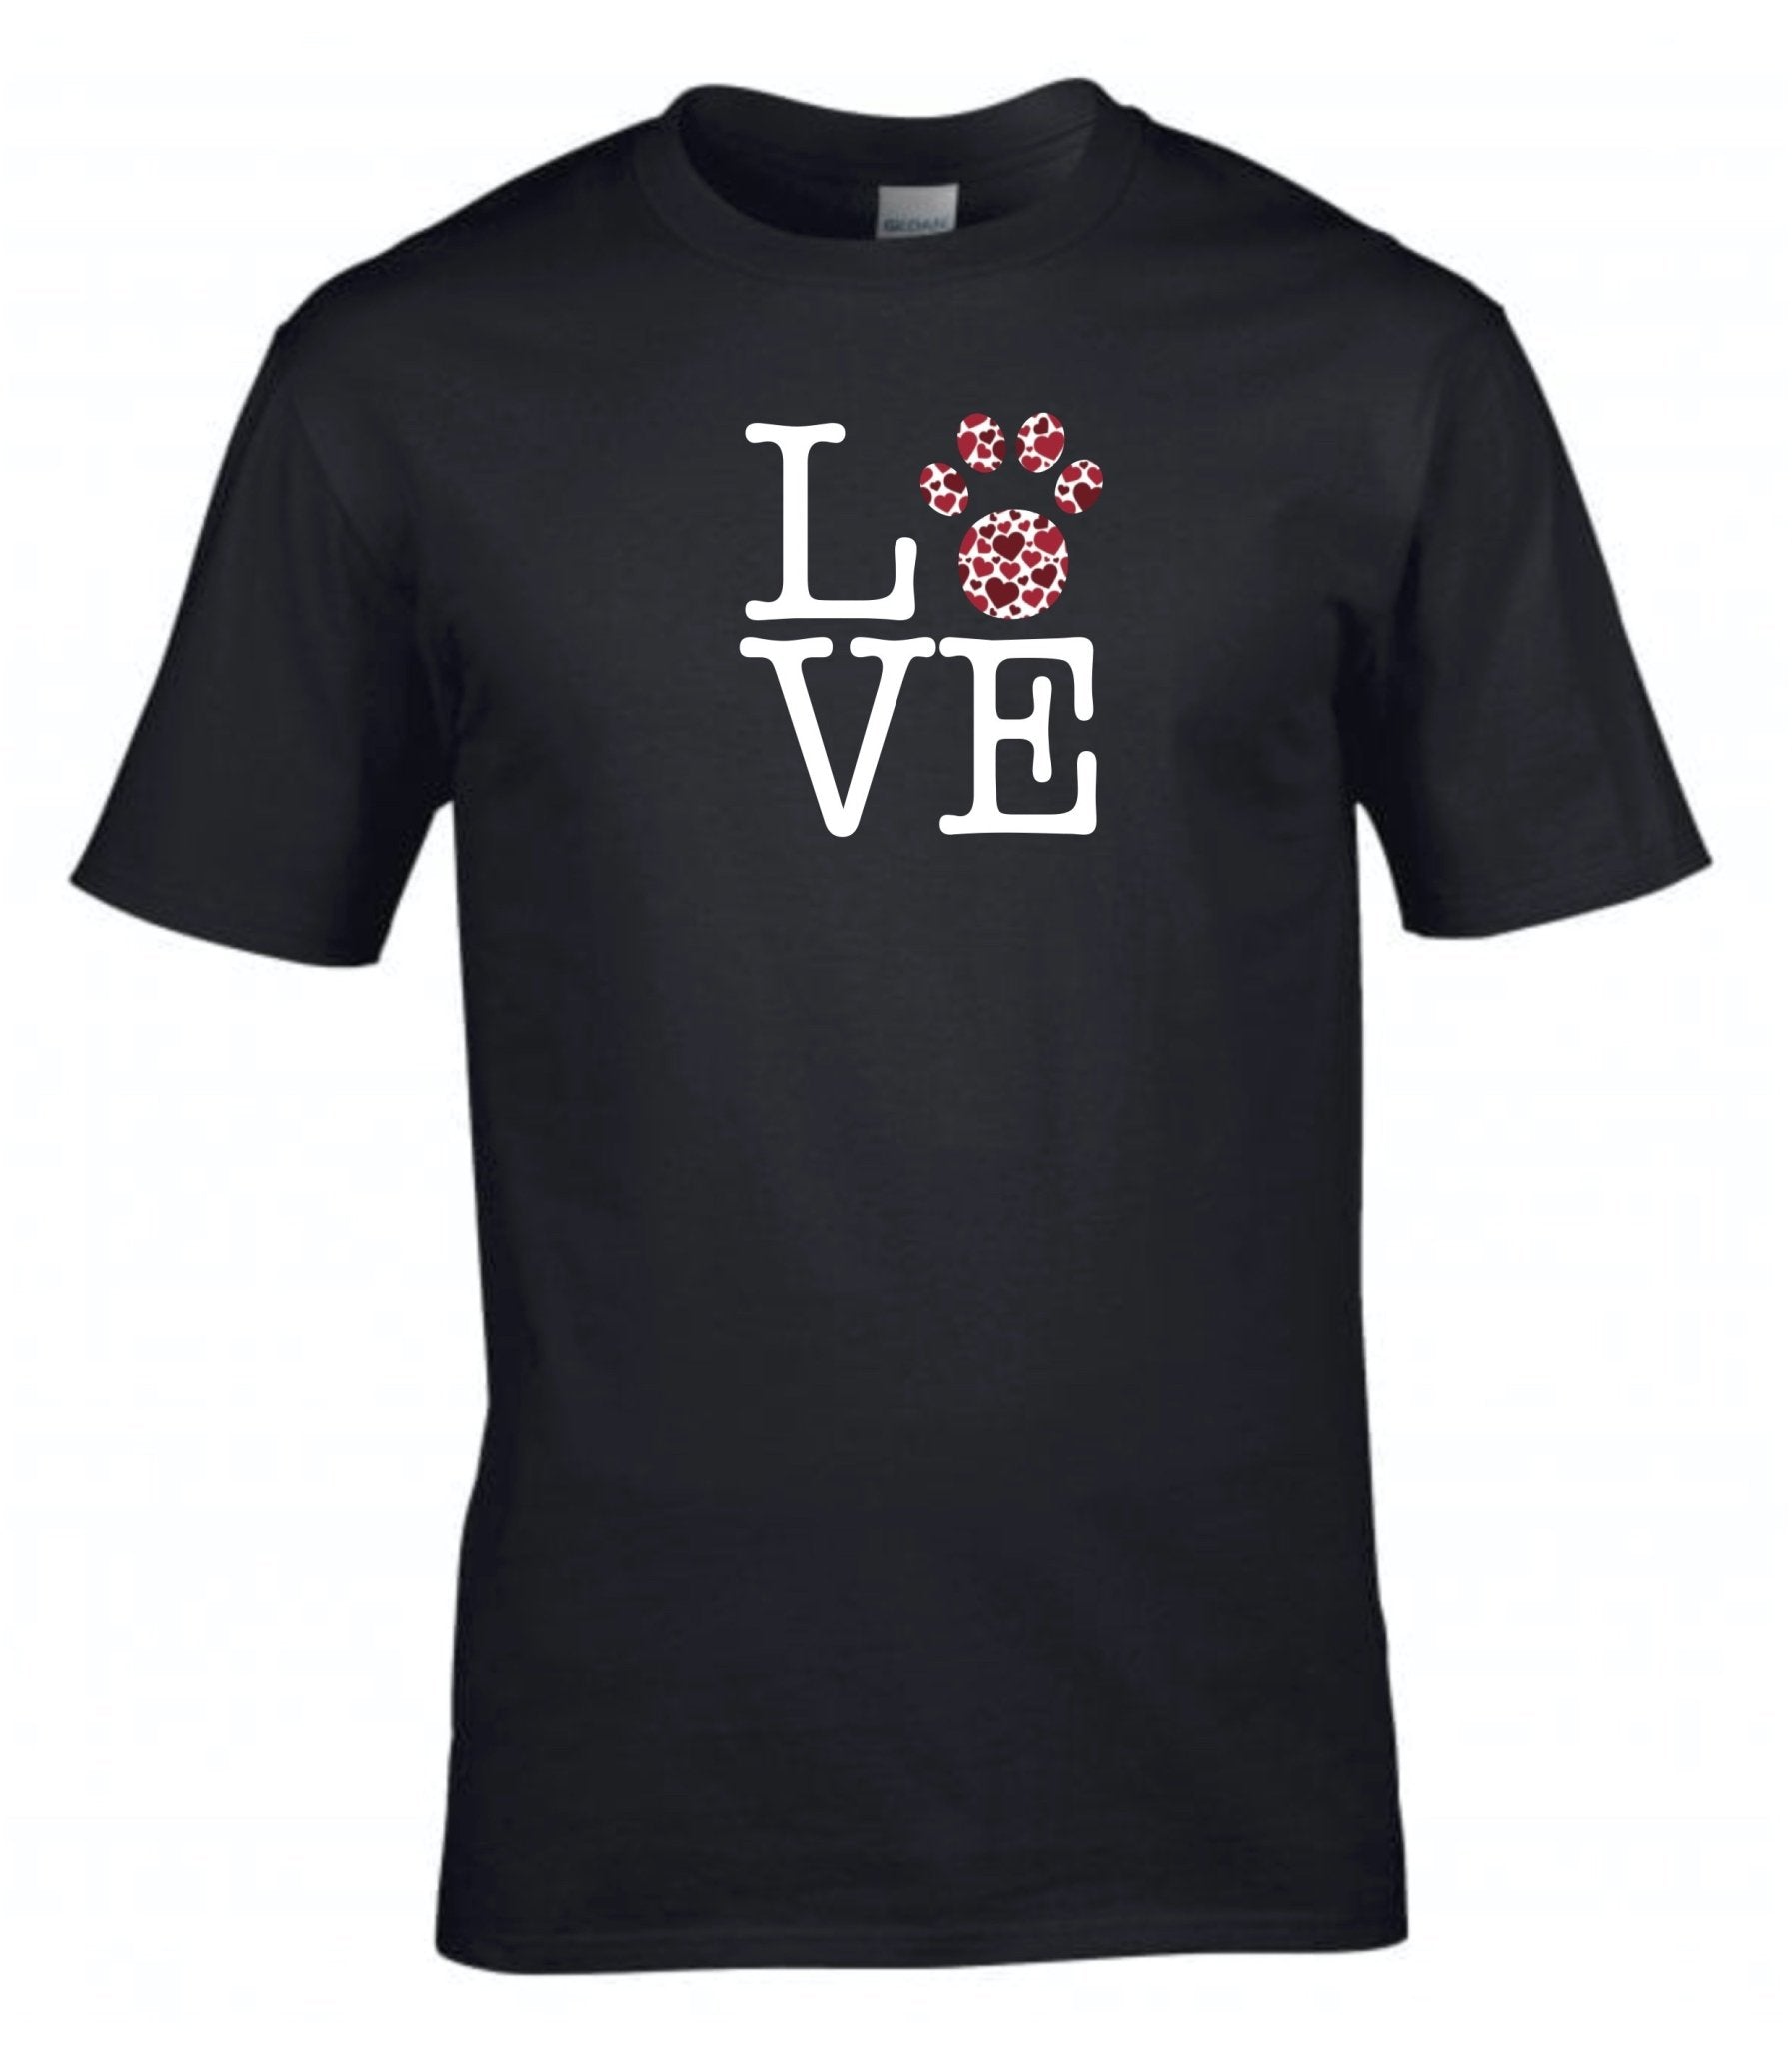 Love Paw Print Women's T-shirt - Pooch-